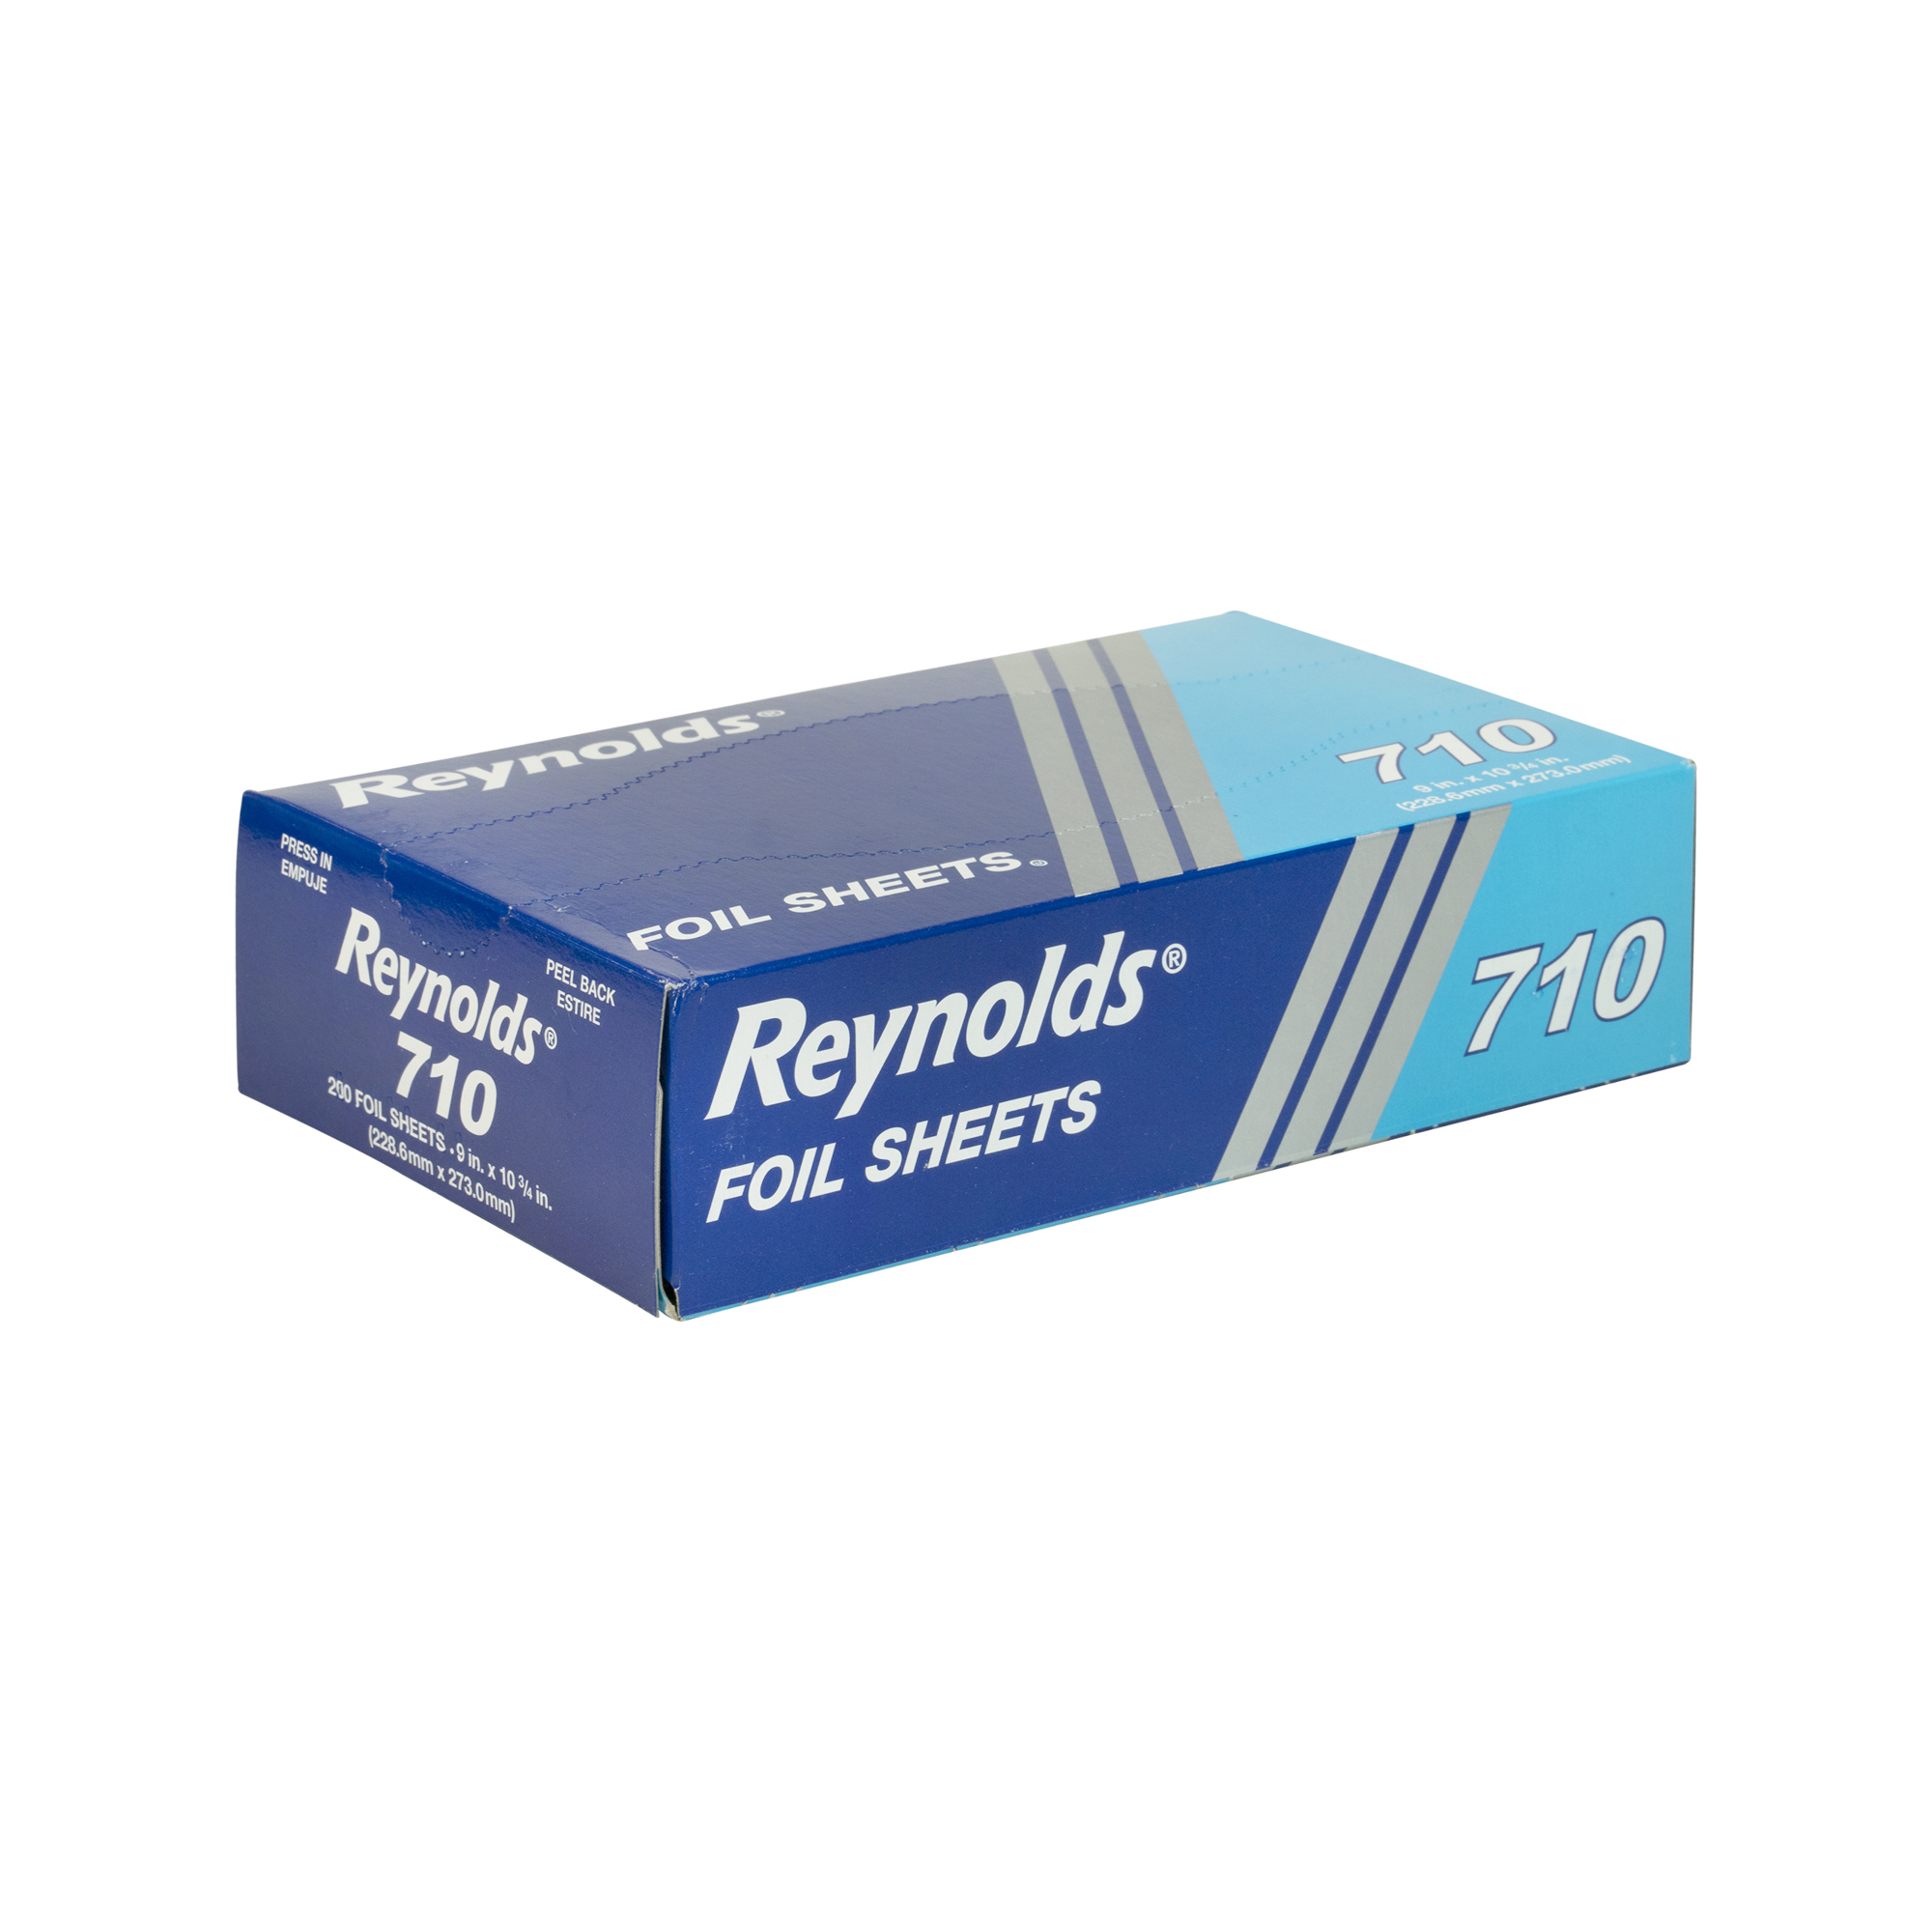 Reynolds 710 9 x 10.75 in. Interfolded Aluminum Foil Sheets - Case